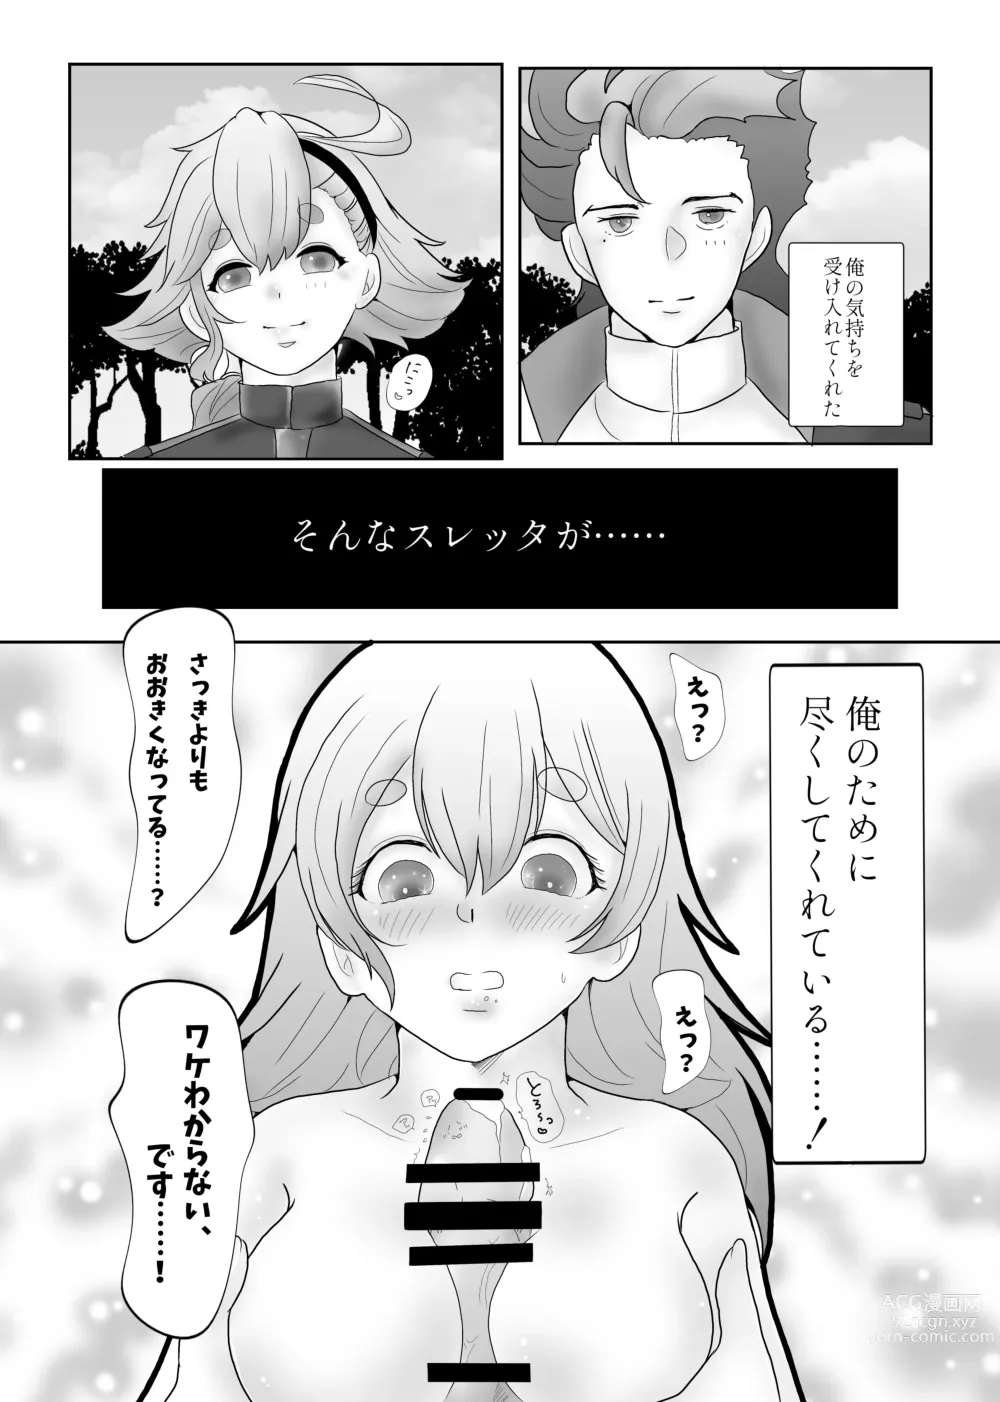 Page 10 of doujinshi Nichijō romantikku